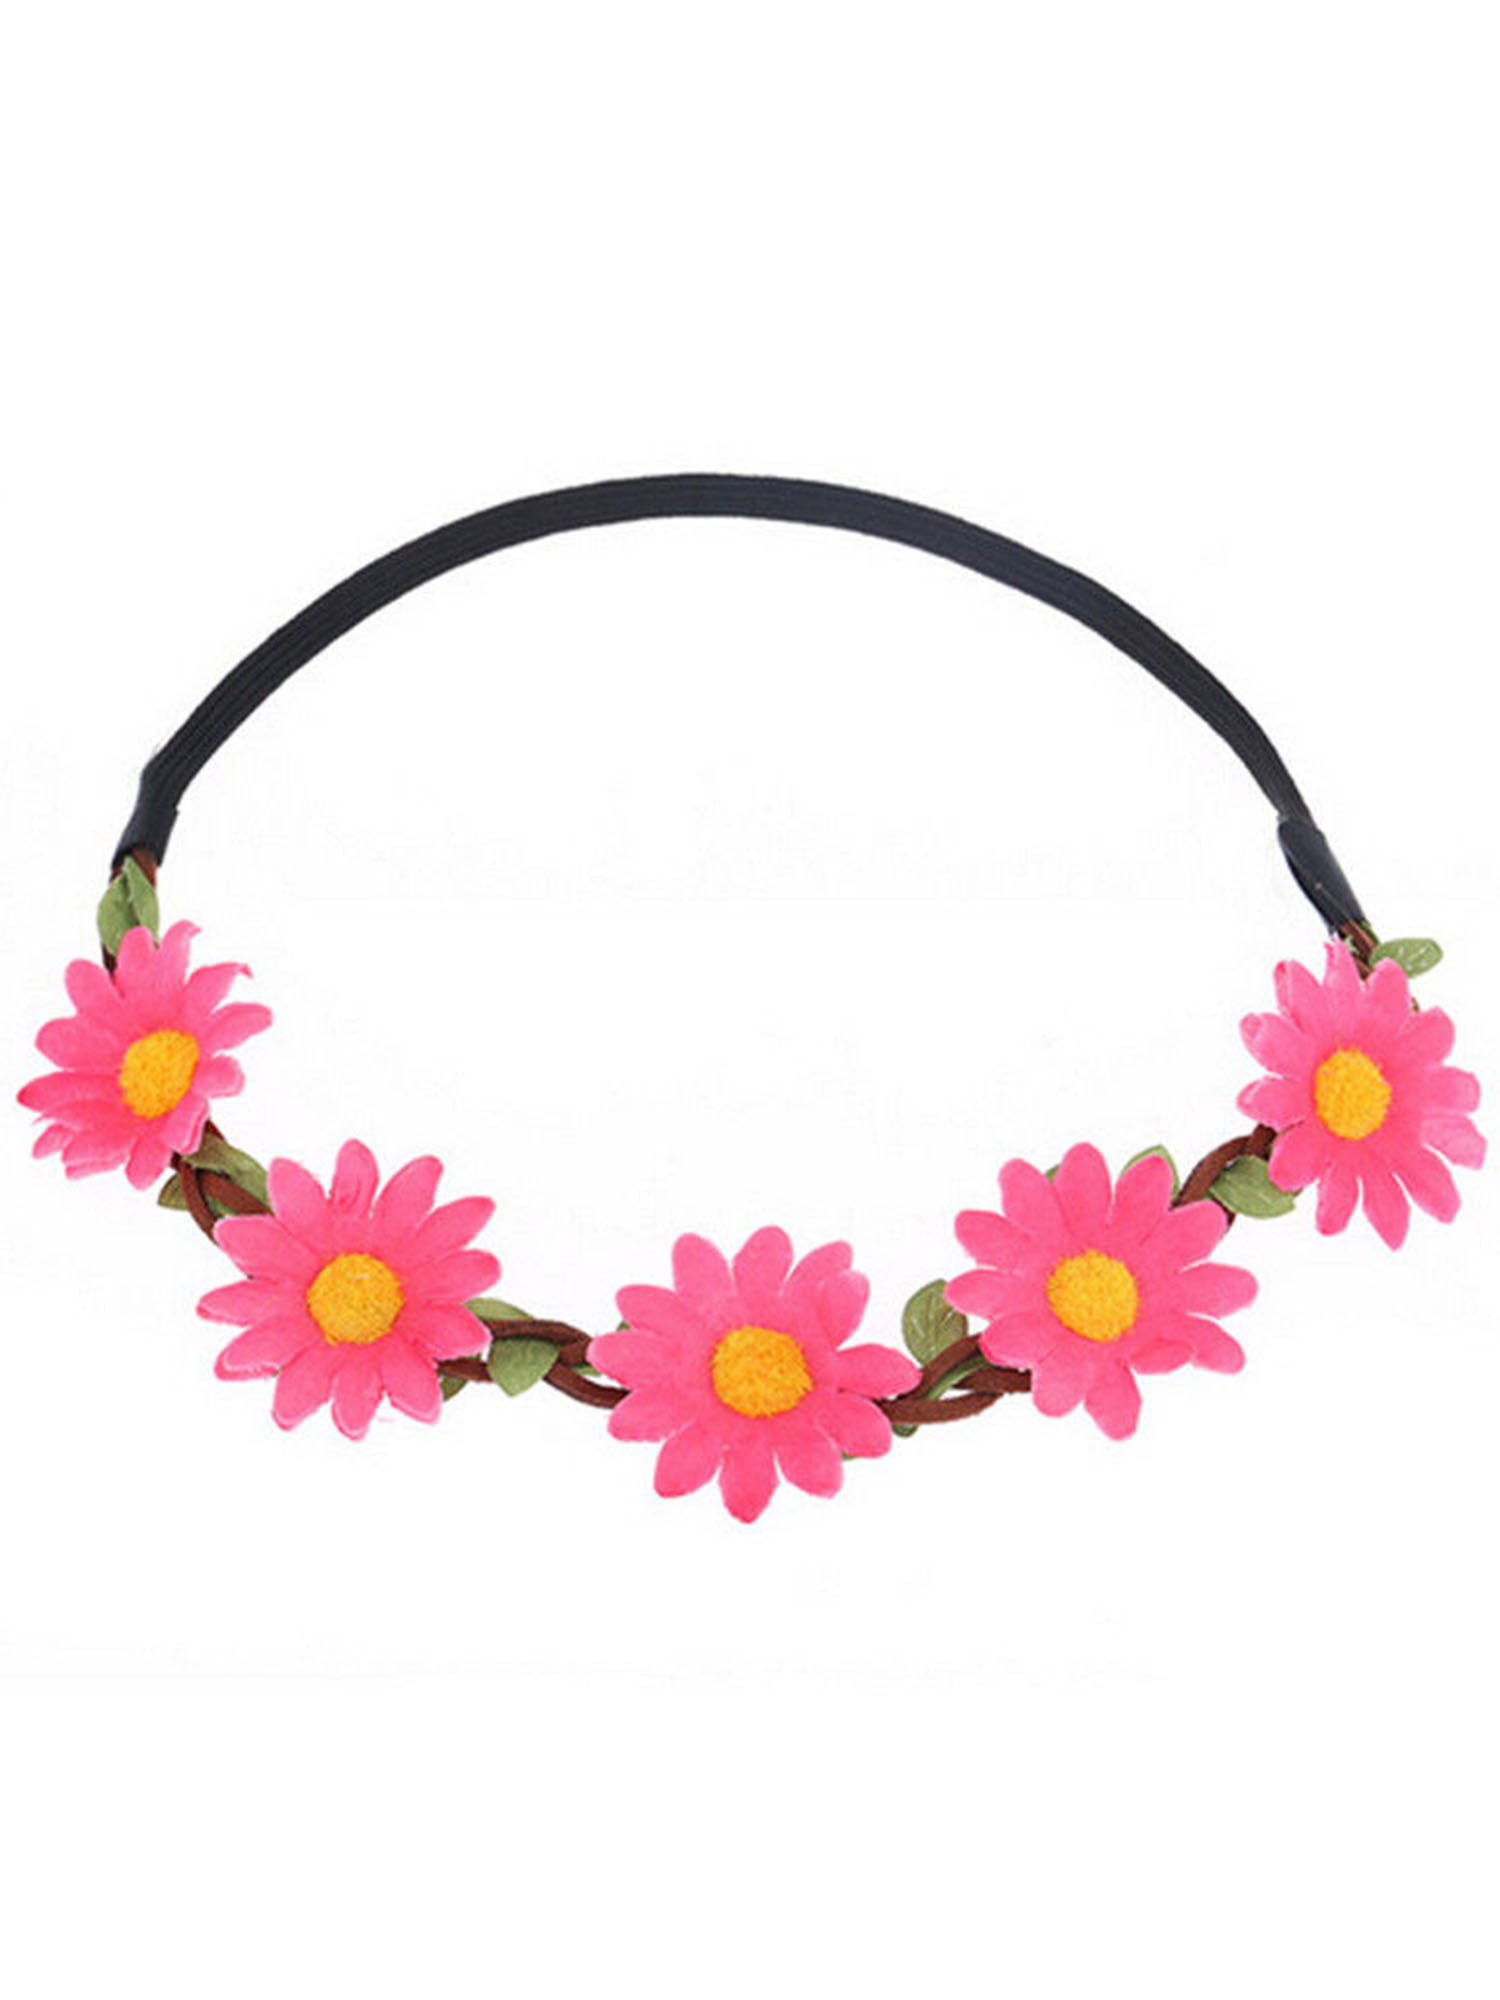 50pcs 3.2" Lace Fabric Chiffon Flower+Rhinestones Pearls For Headbands